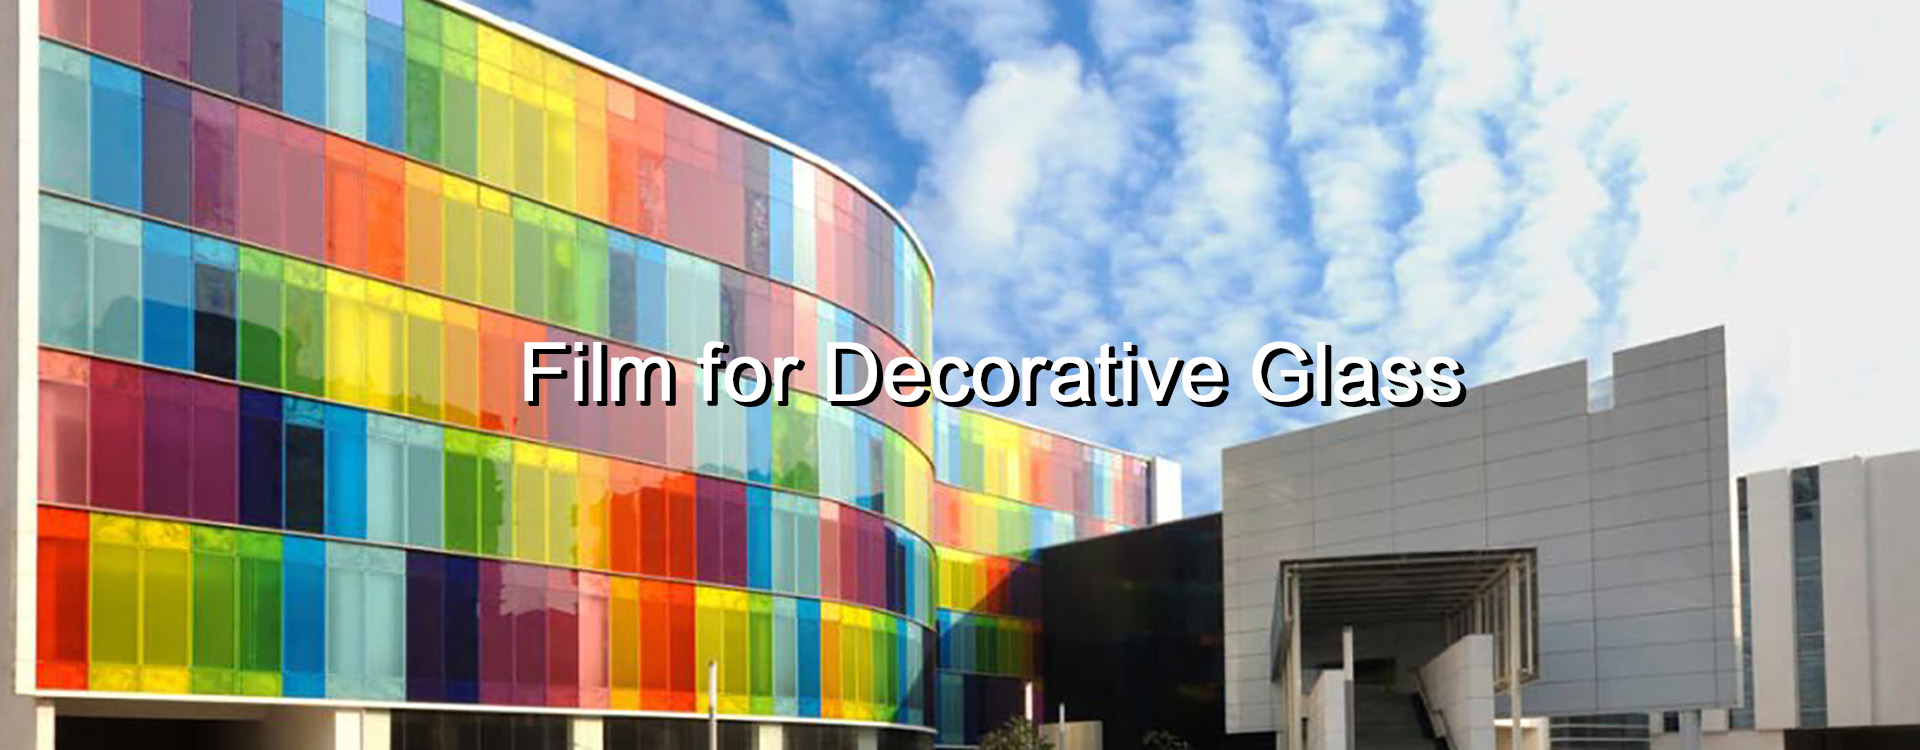 Film for Decorative Glass